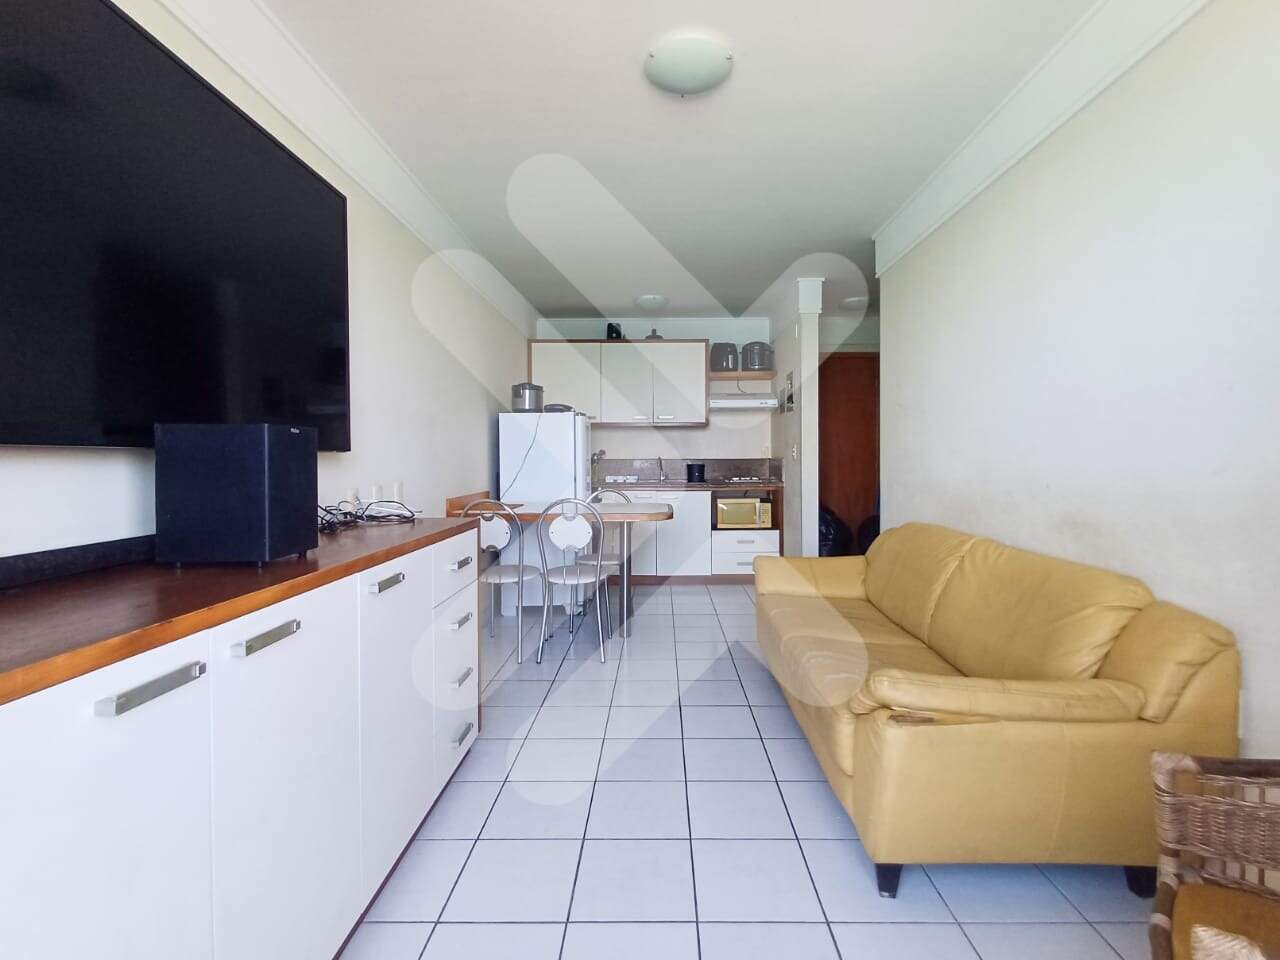 Apartamento para aluguelPonta NegraNatal: 